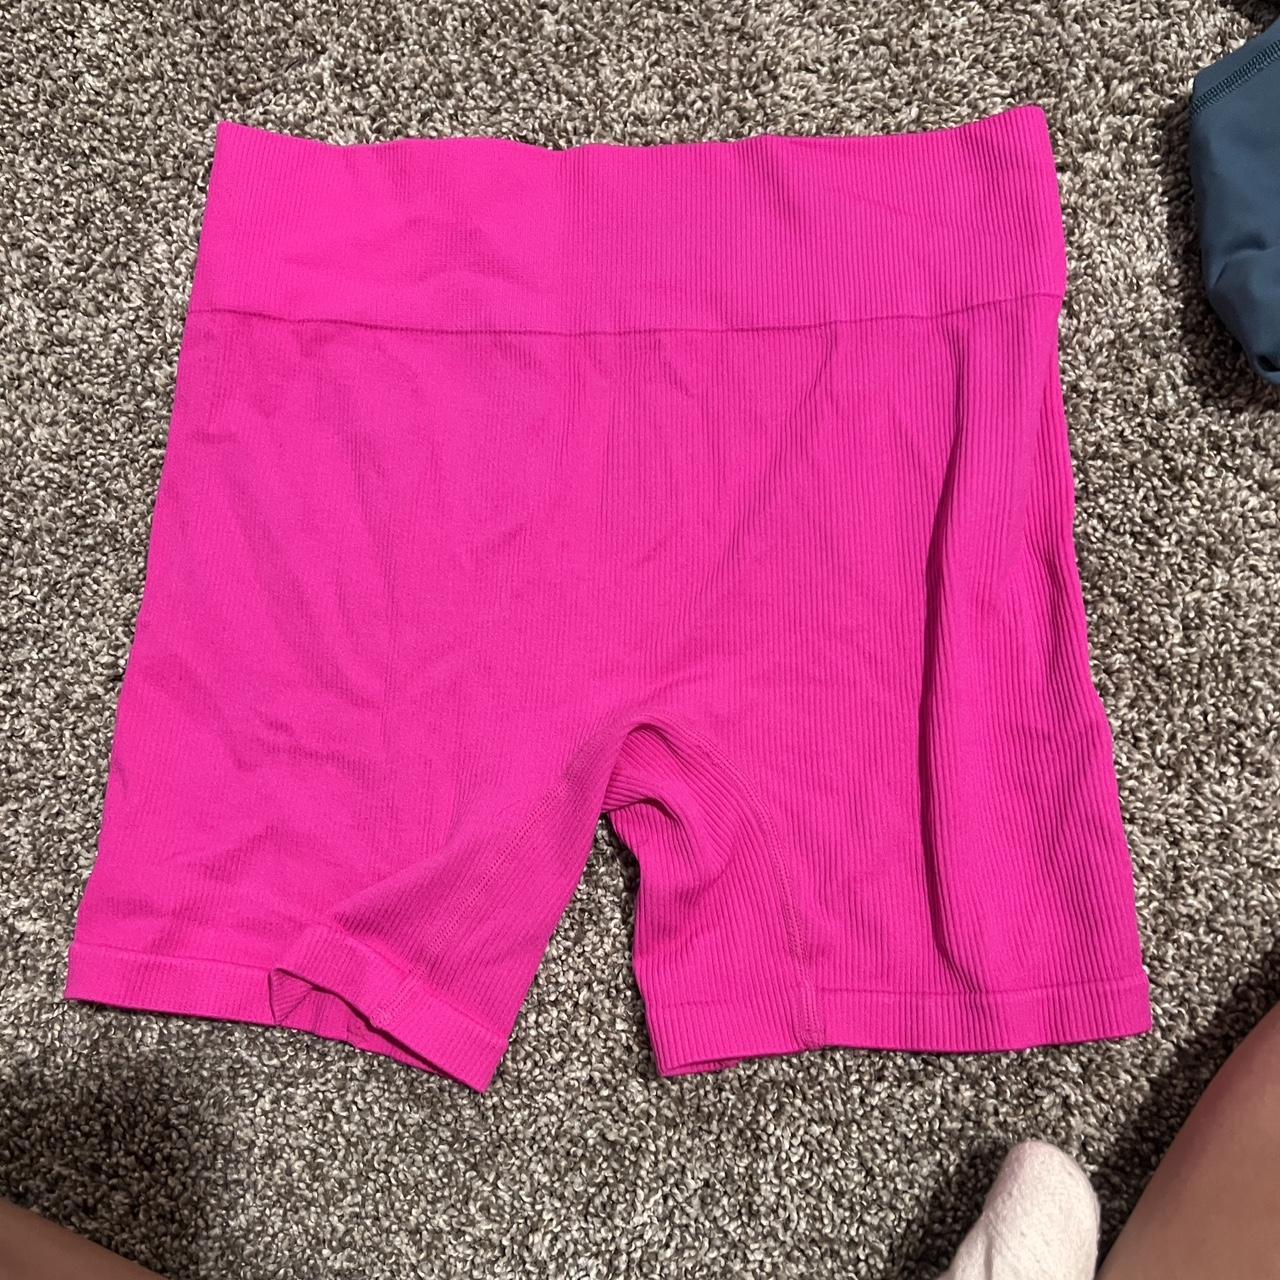 target pink biker shorts size medium #shorts - Depop